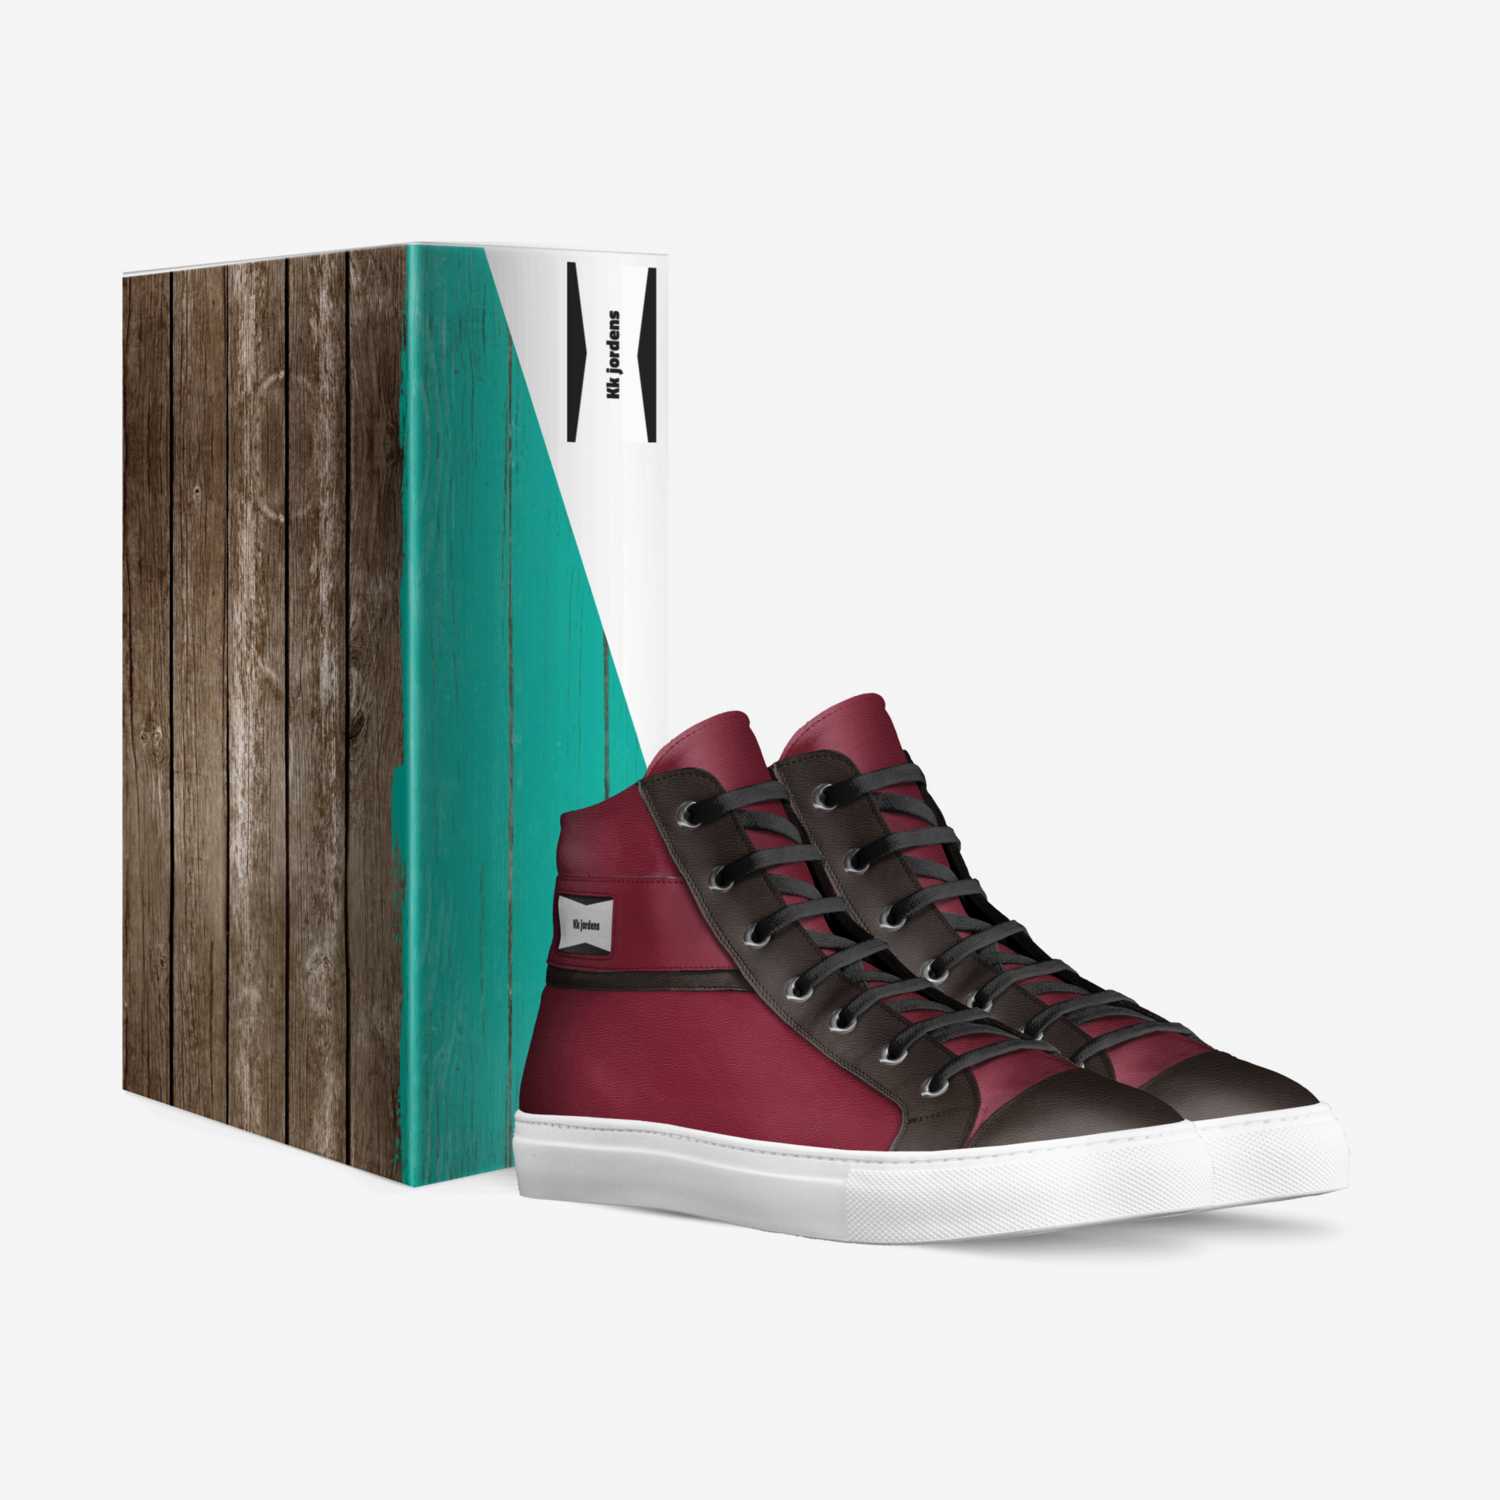 Kk jordens custom made in Italy shoes by Kristen | Box view